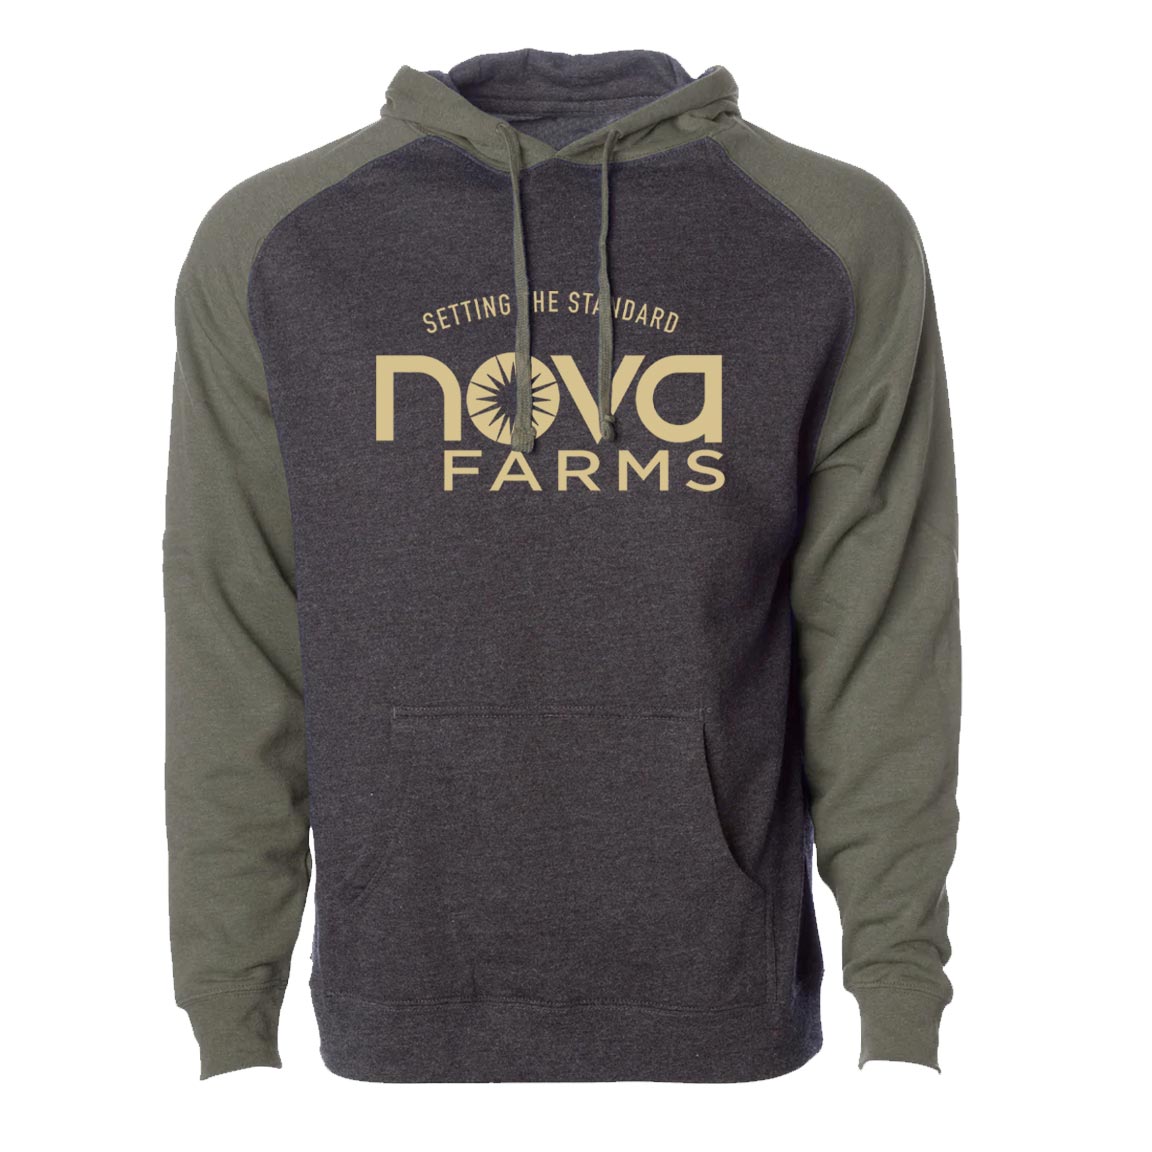 Nova Farms - Setting the Standard - Lightweight Hoodie